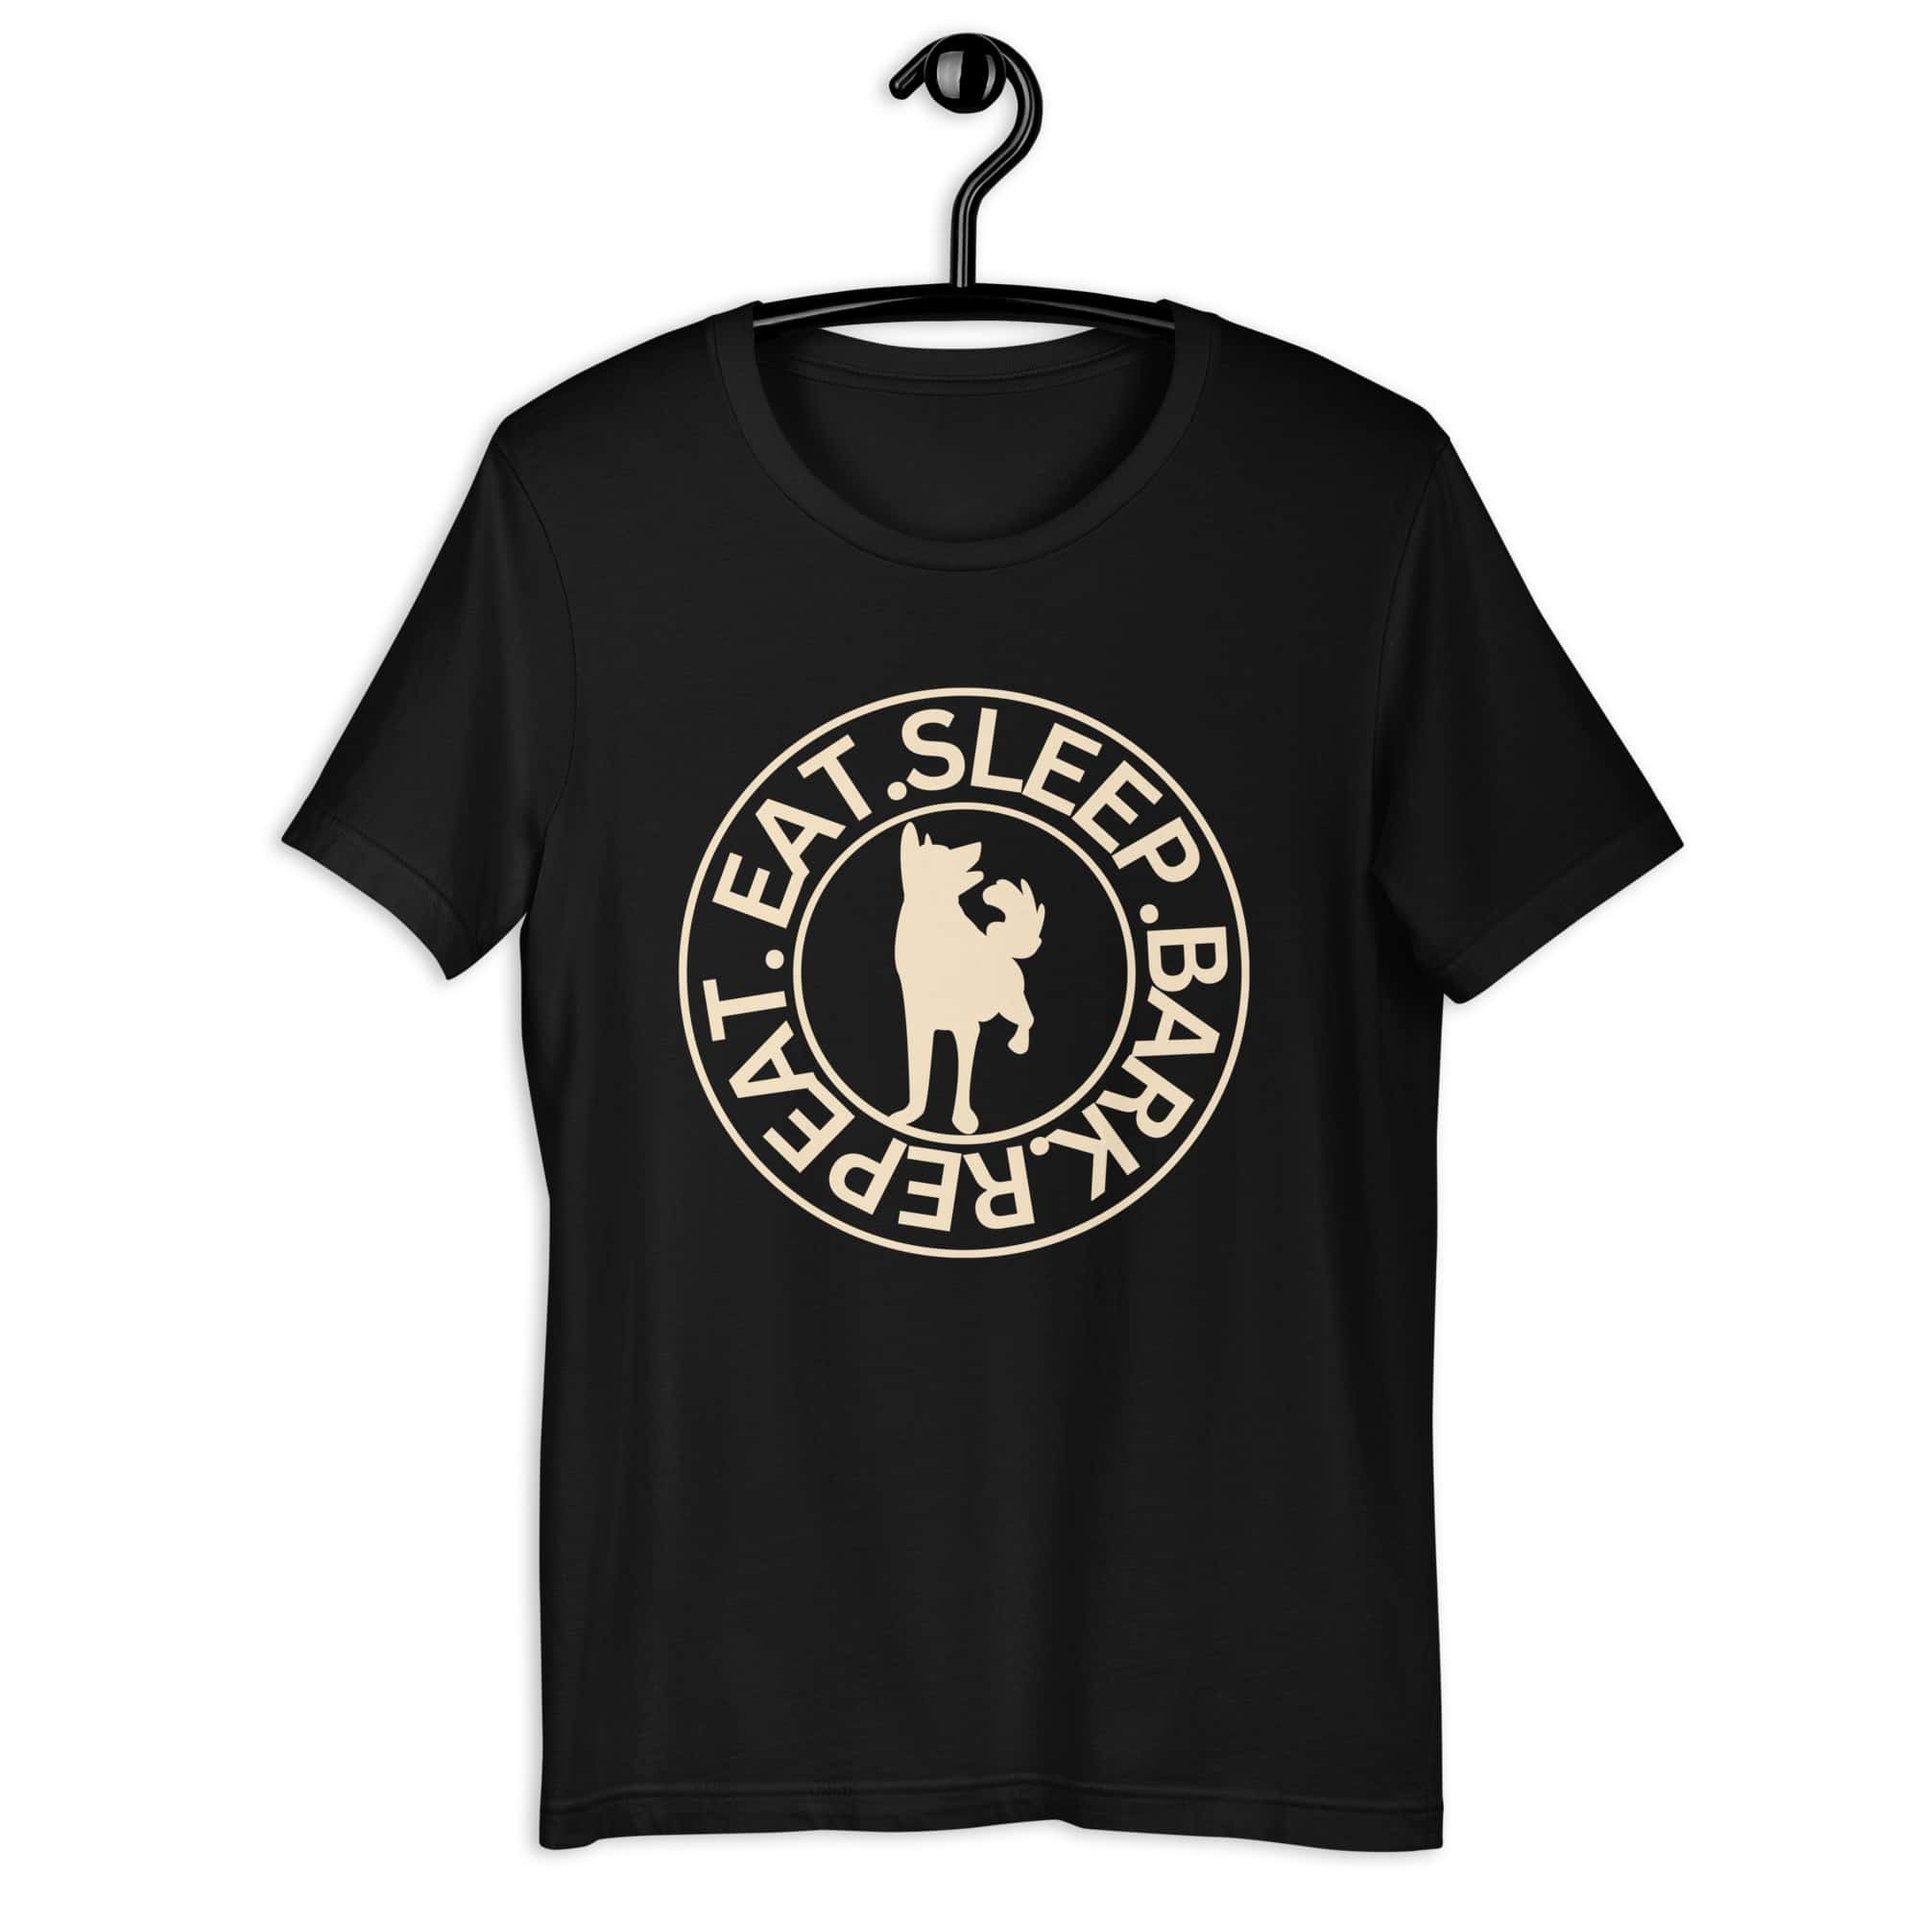 Eat Sleep Bark Repeat Shepherd Unisex T-Shirt. Black